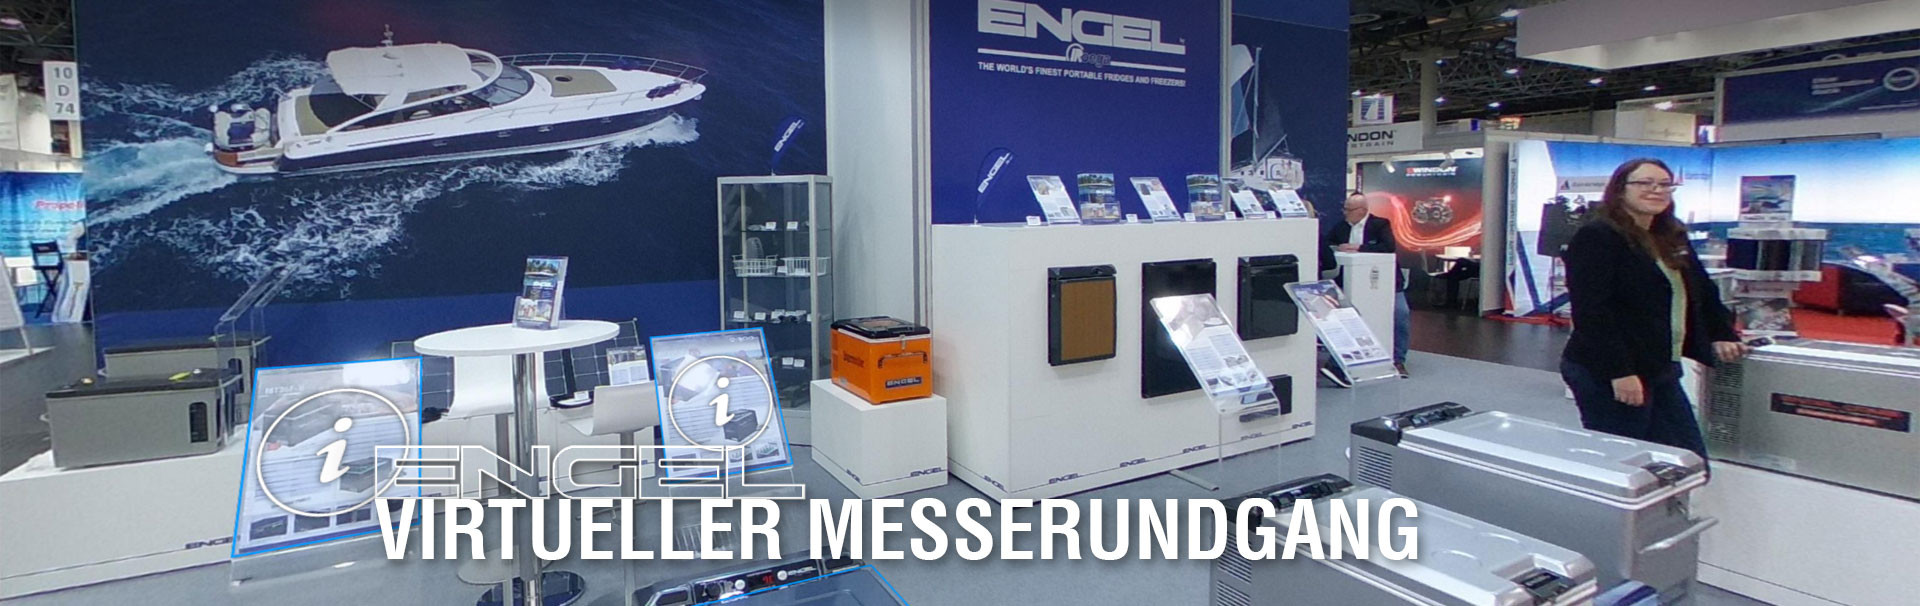 Engel Coolers MD14-F Kühlbox Kompressor 12 V Grau 14 l -18 , +10 °C kaufen